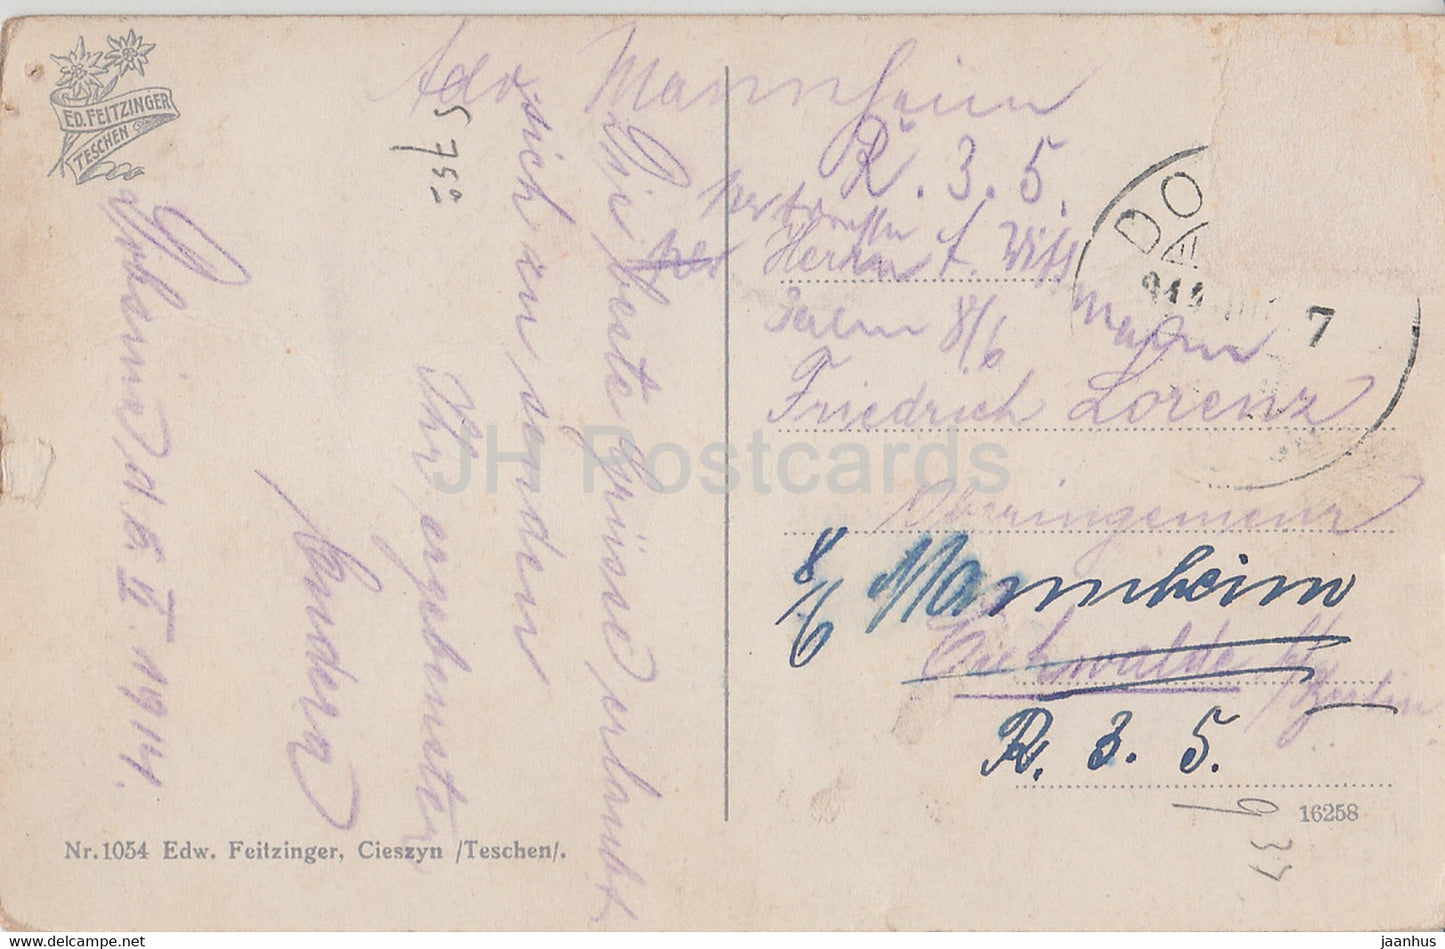 Tatry - Morskie Oko - Nagy halas to - Crosser Fischsee - Tatra - 1054 - carte postale ancienne - Pologne - utilisé